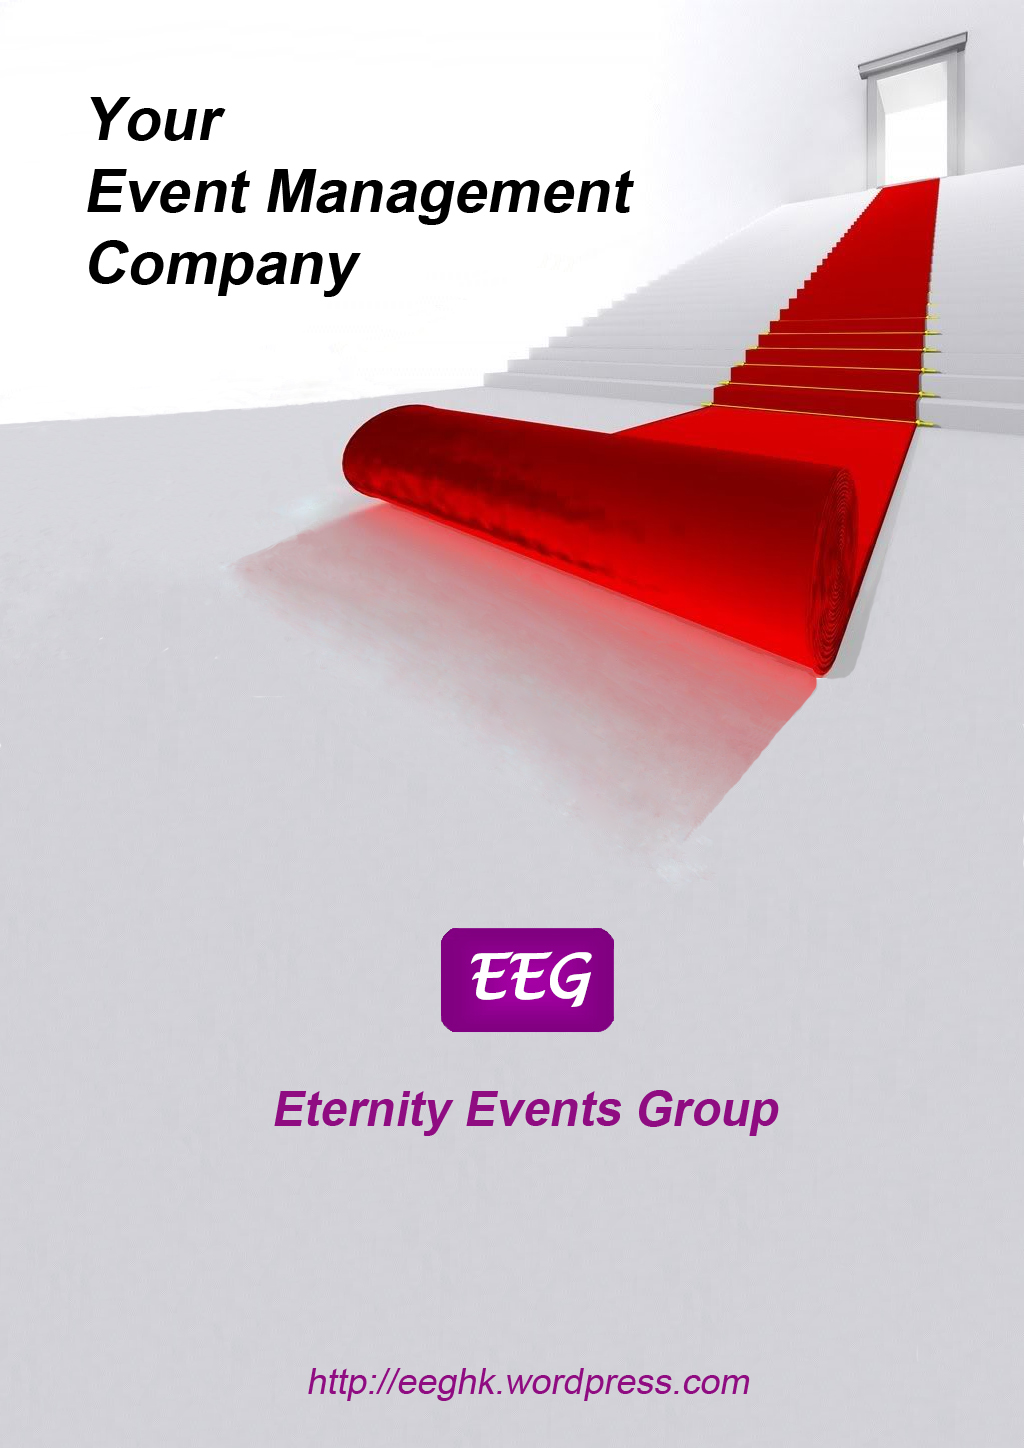 Events Management Group